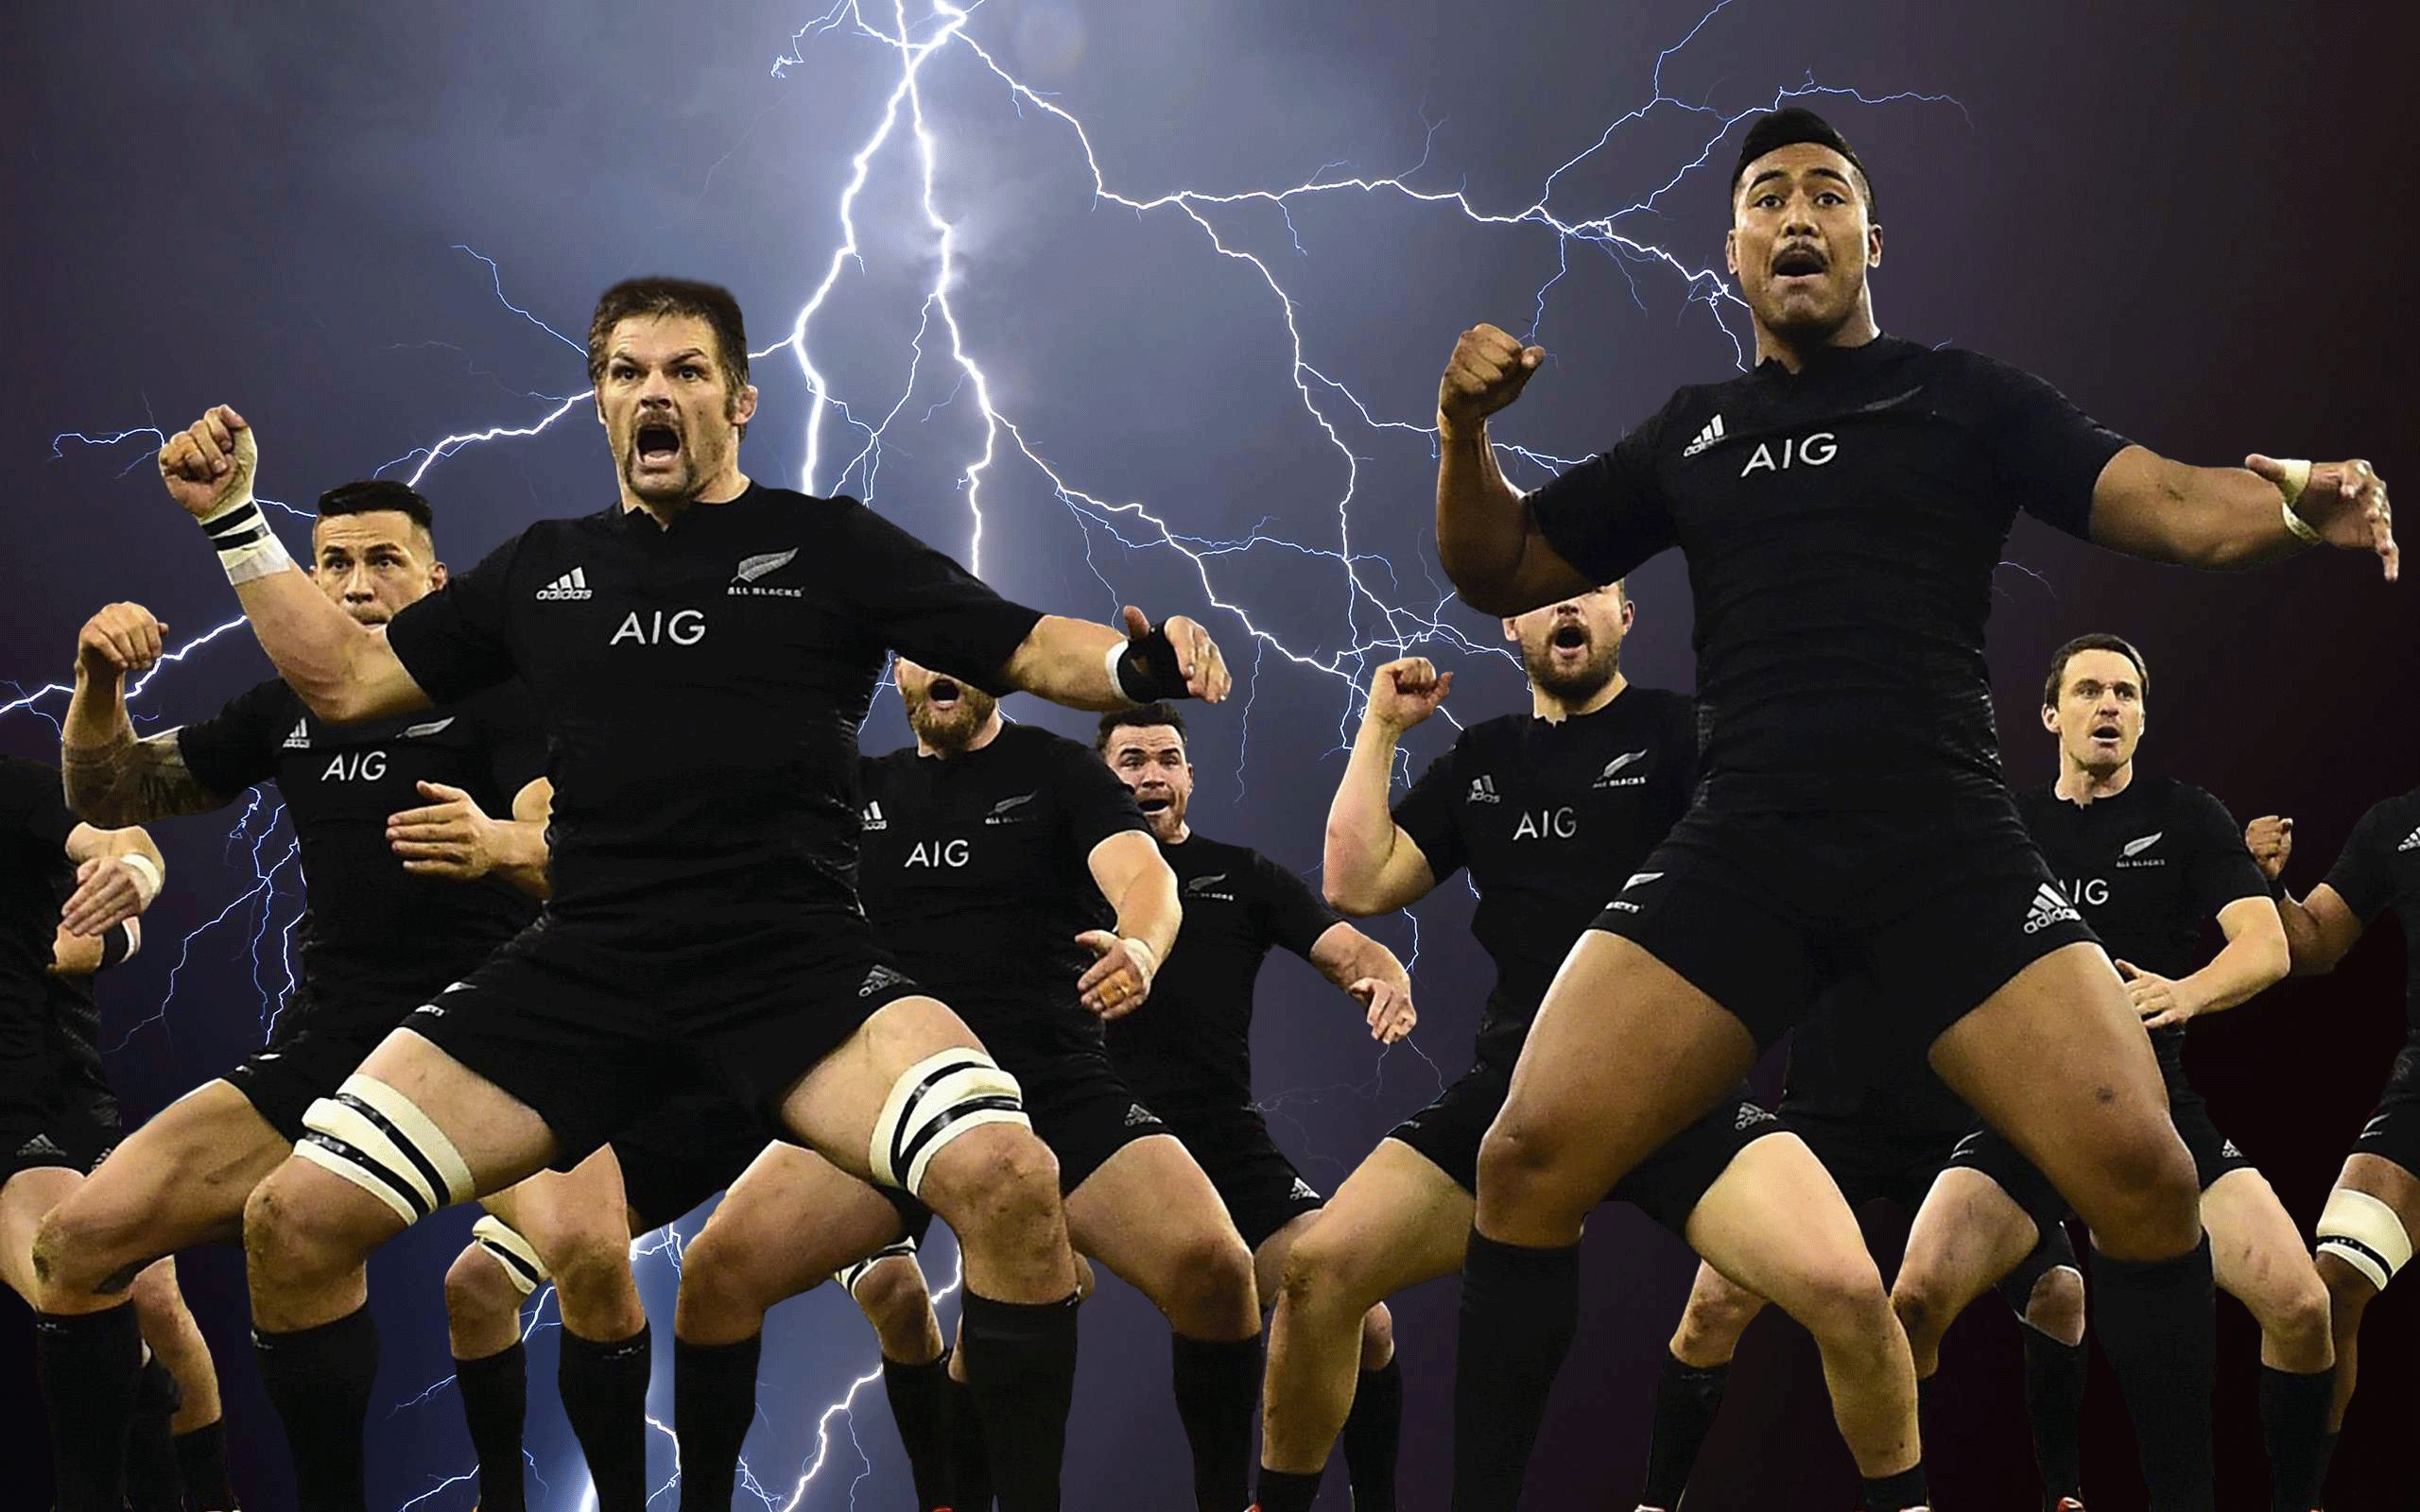 All Blacks rugby Haka poster created by Gordon Tunstall using Adobe